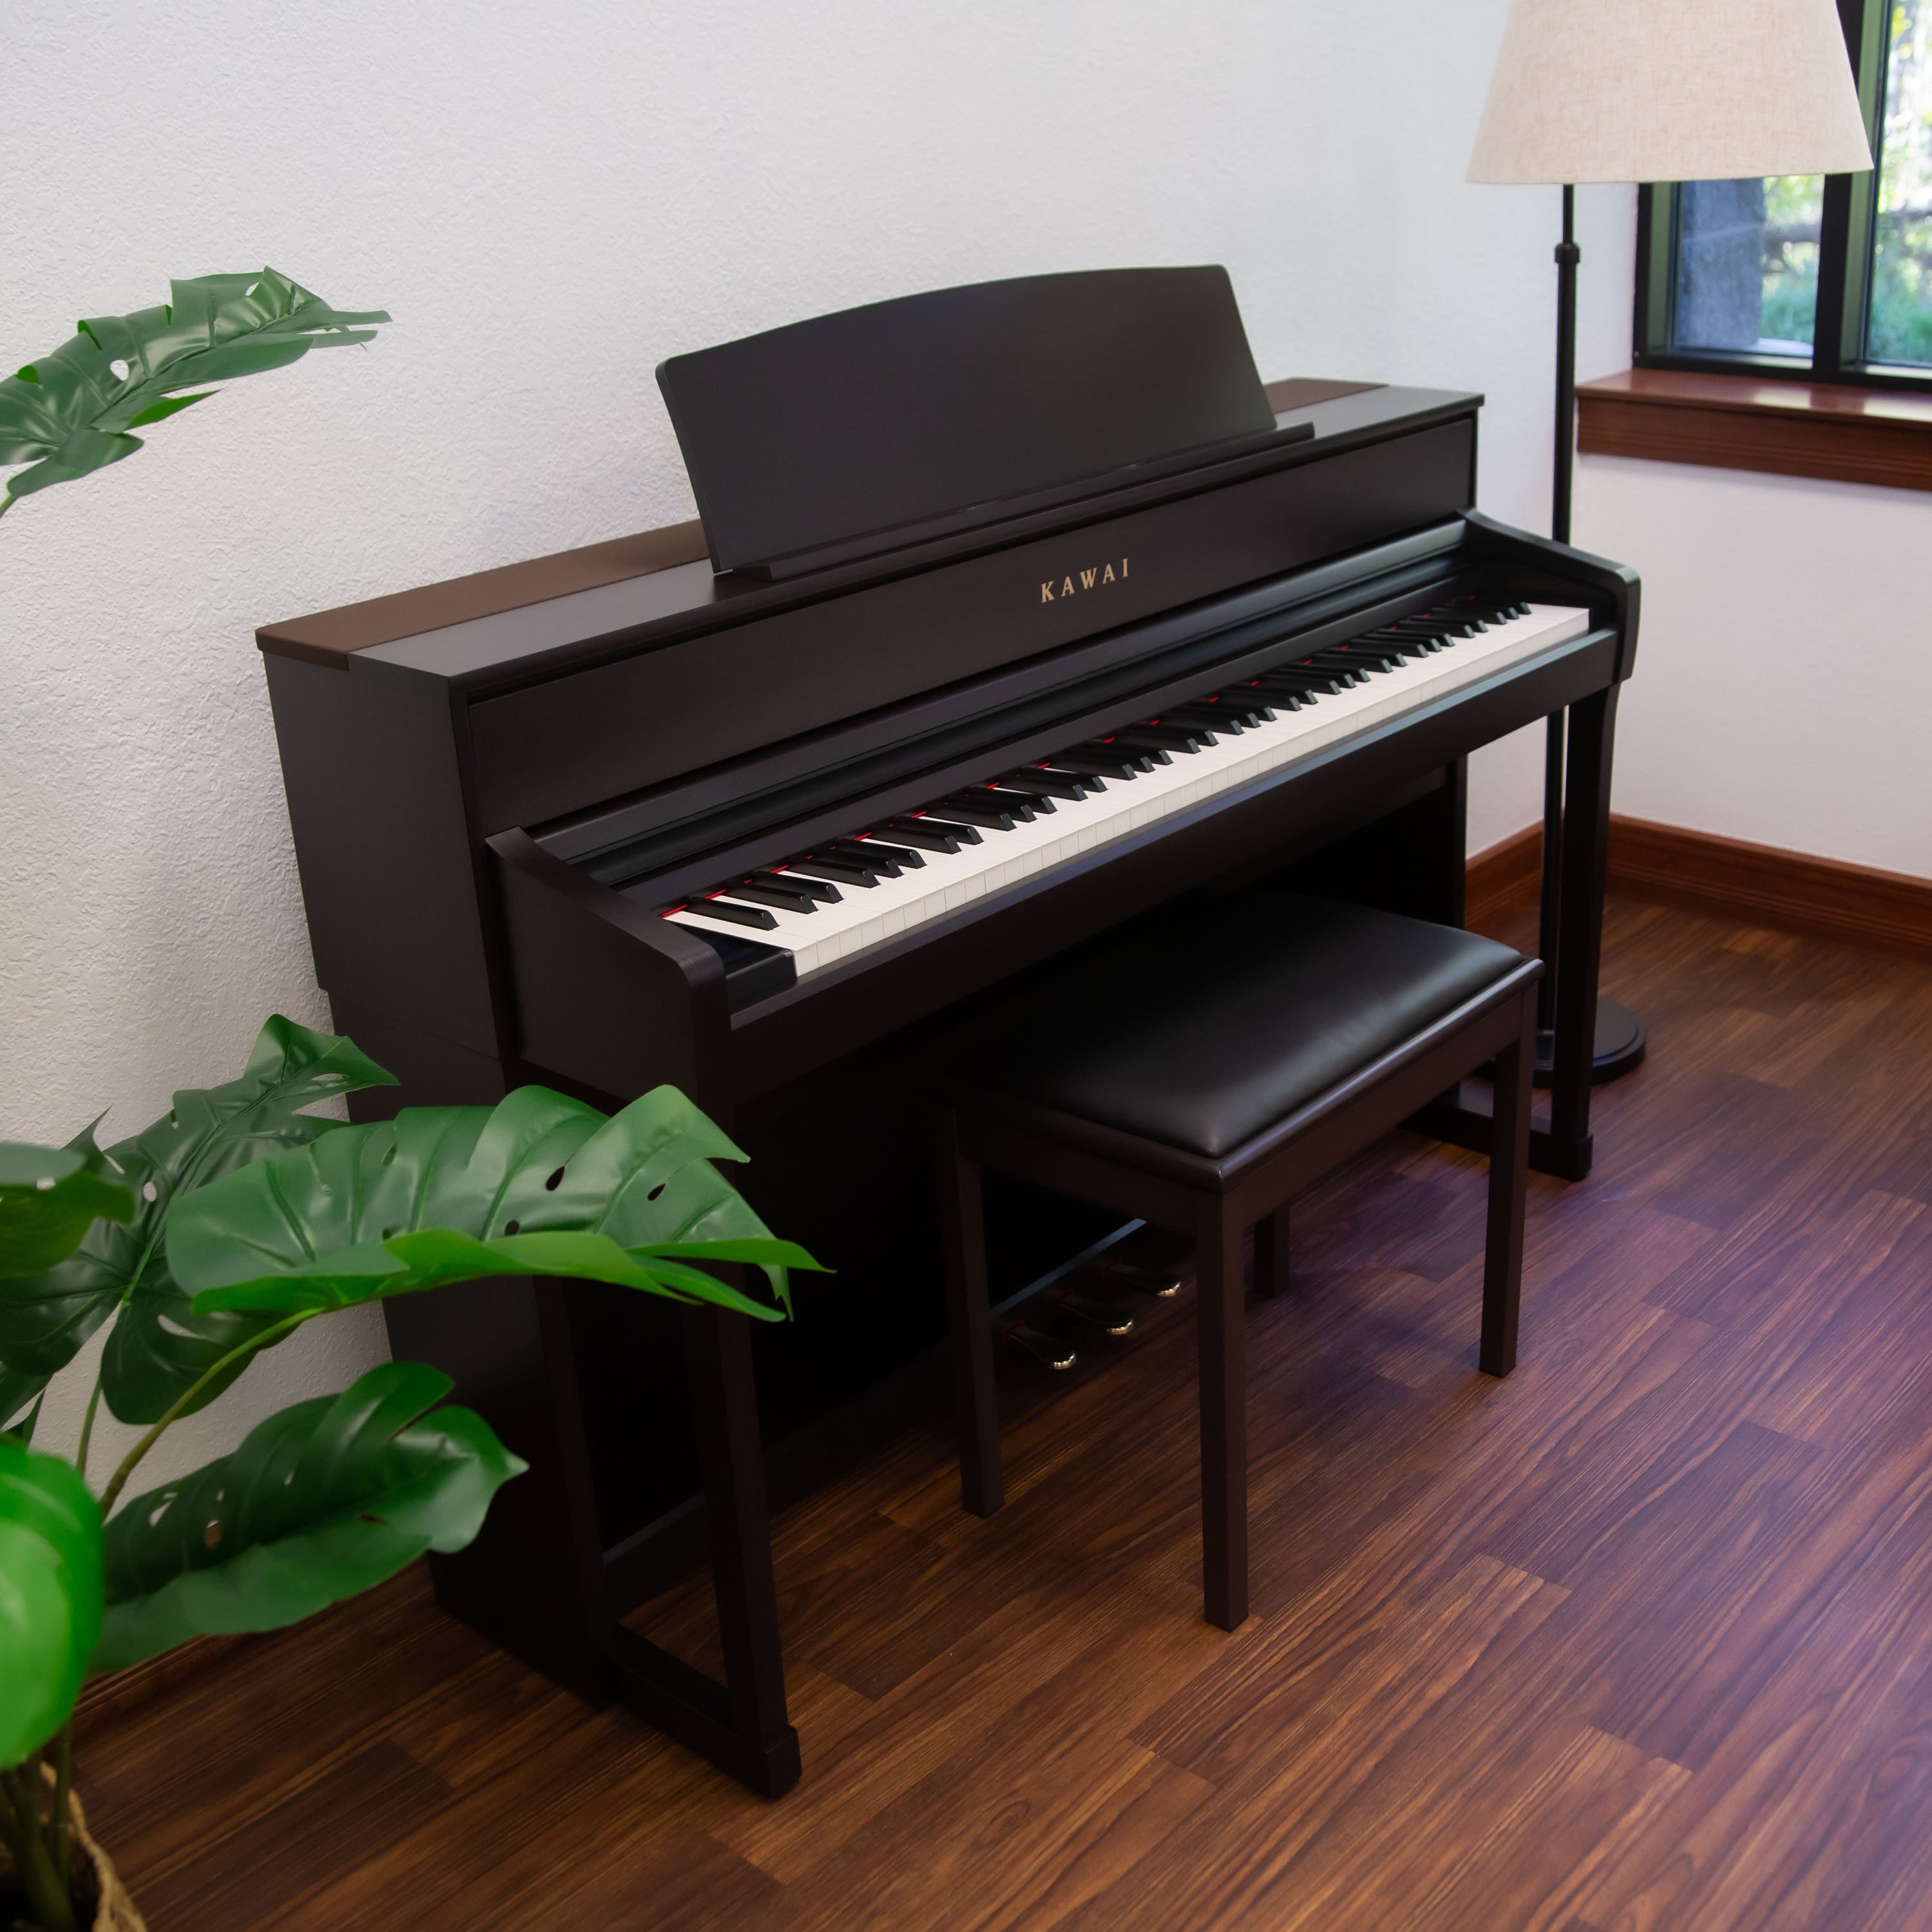 Kawai CA701 Digital Piano - Rosewood - right facing in a stylish living room